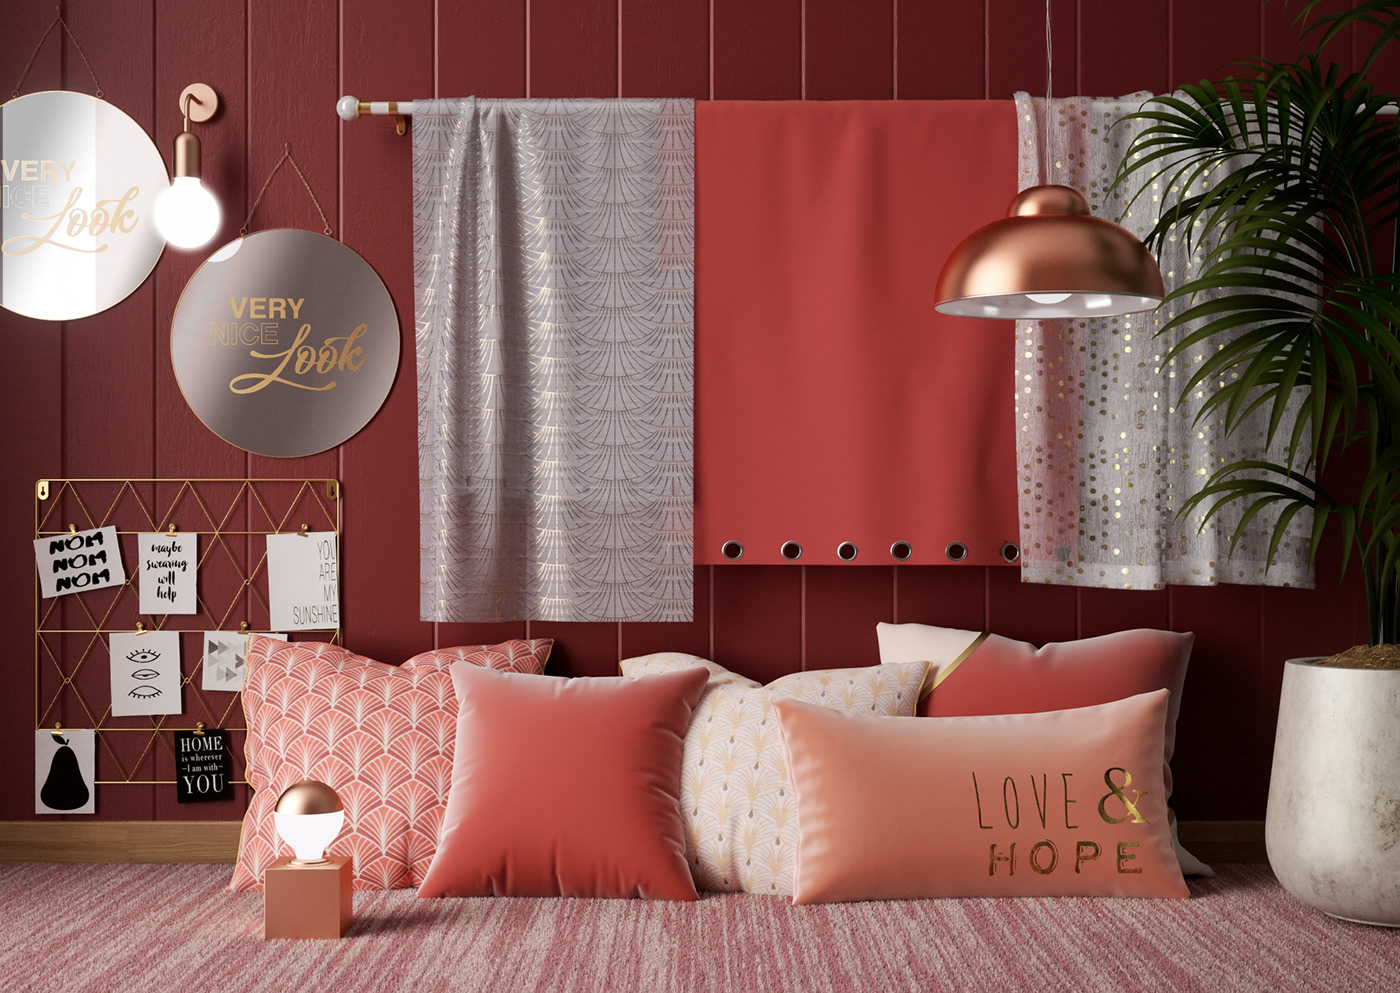 rendering design Interior decoration inspiration 2019 mood 2019 Style studiopodrini studio podrini